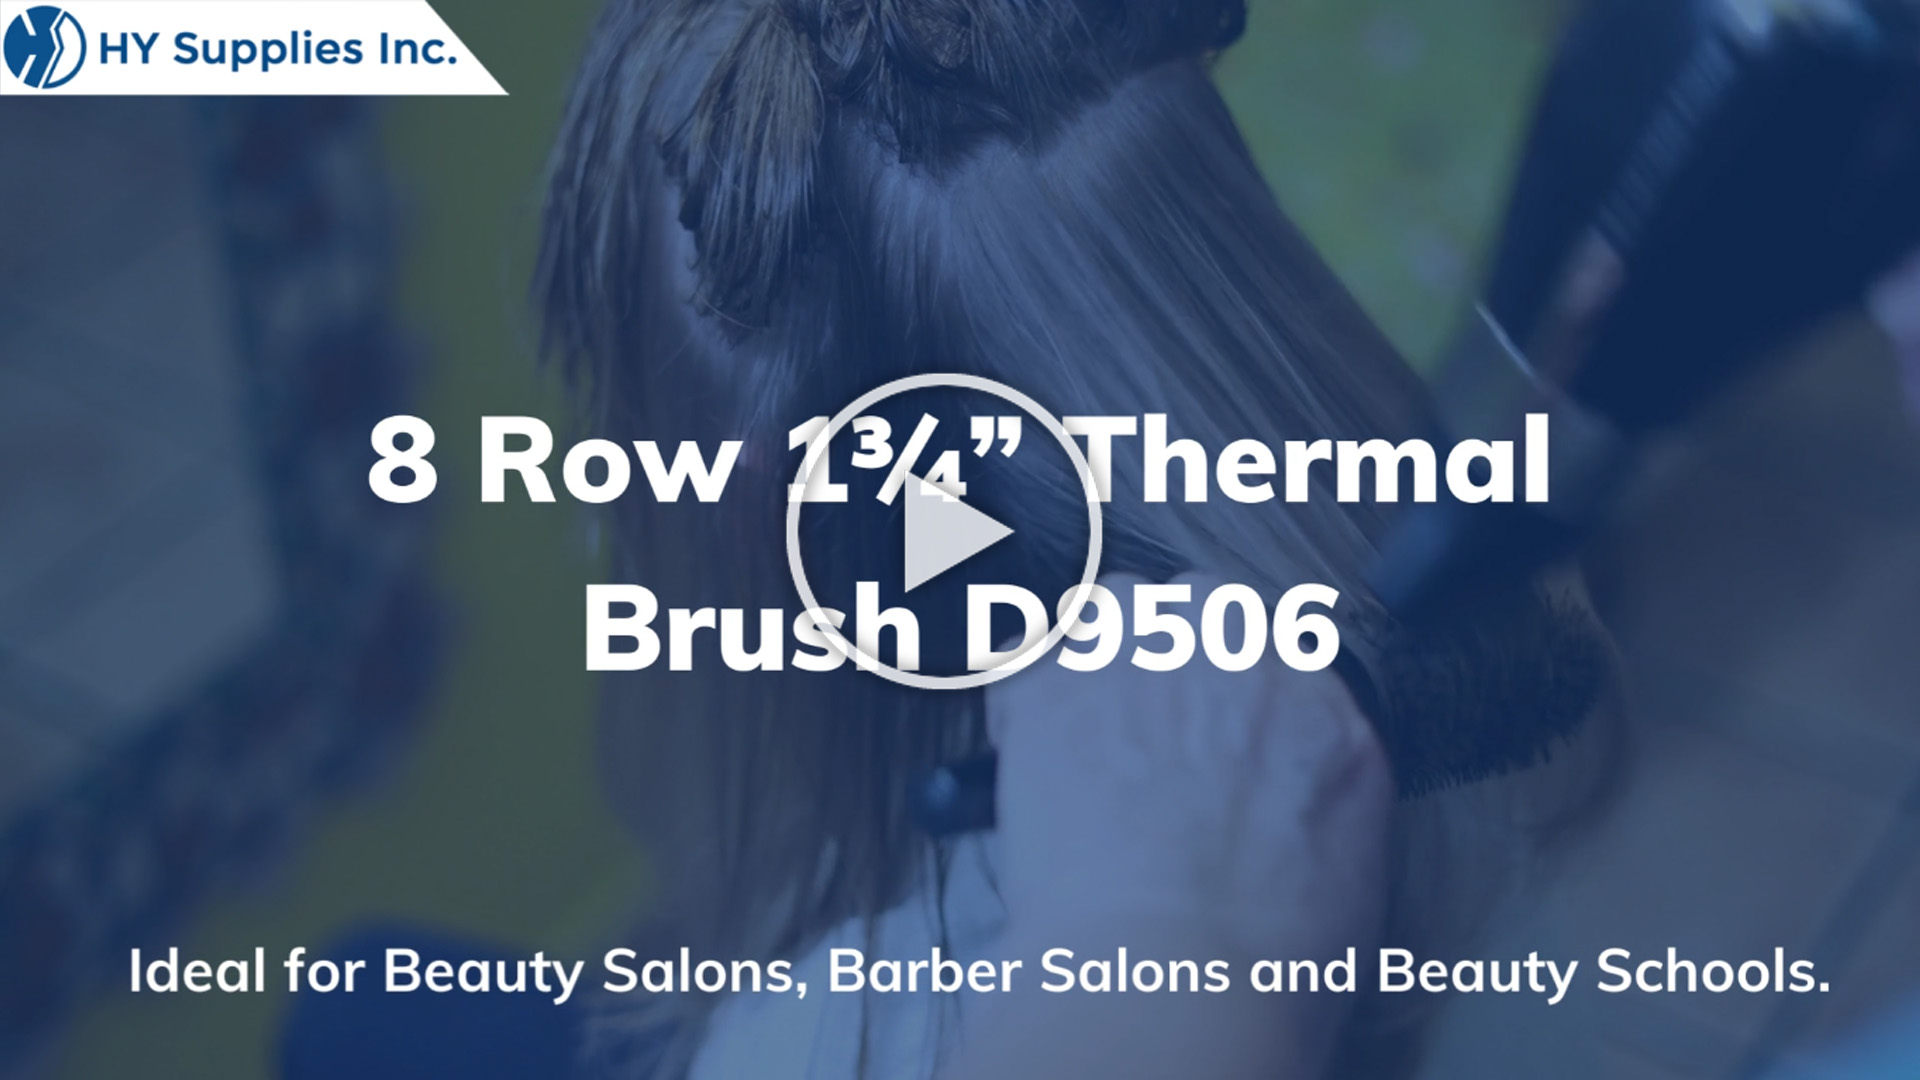 8 Row 1¾” Thermal Brush